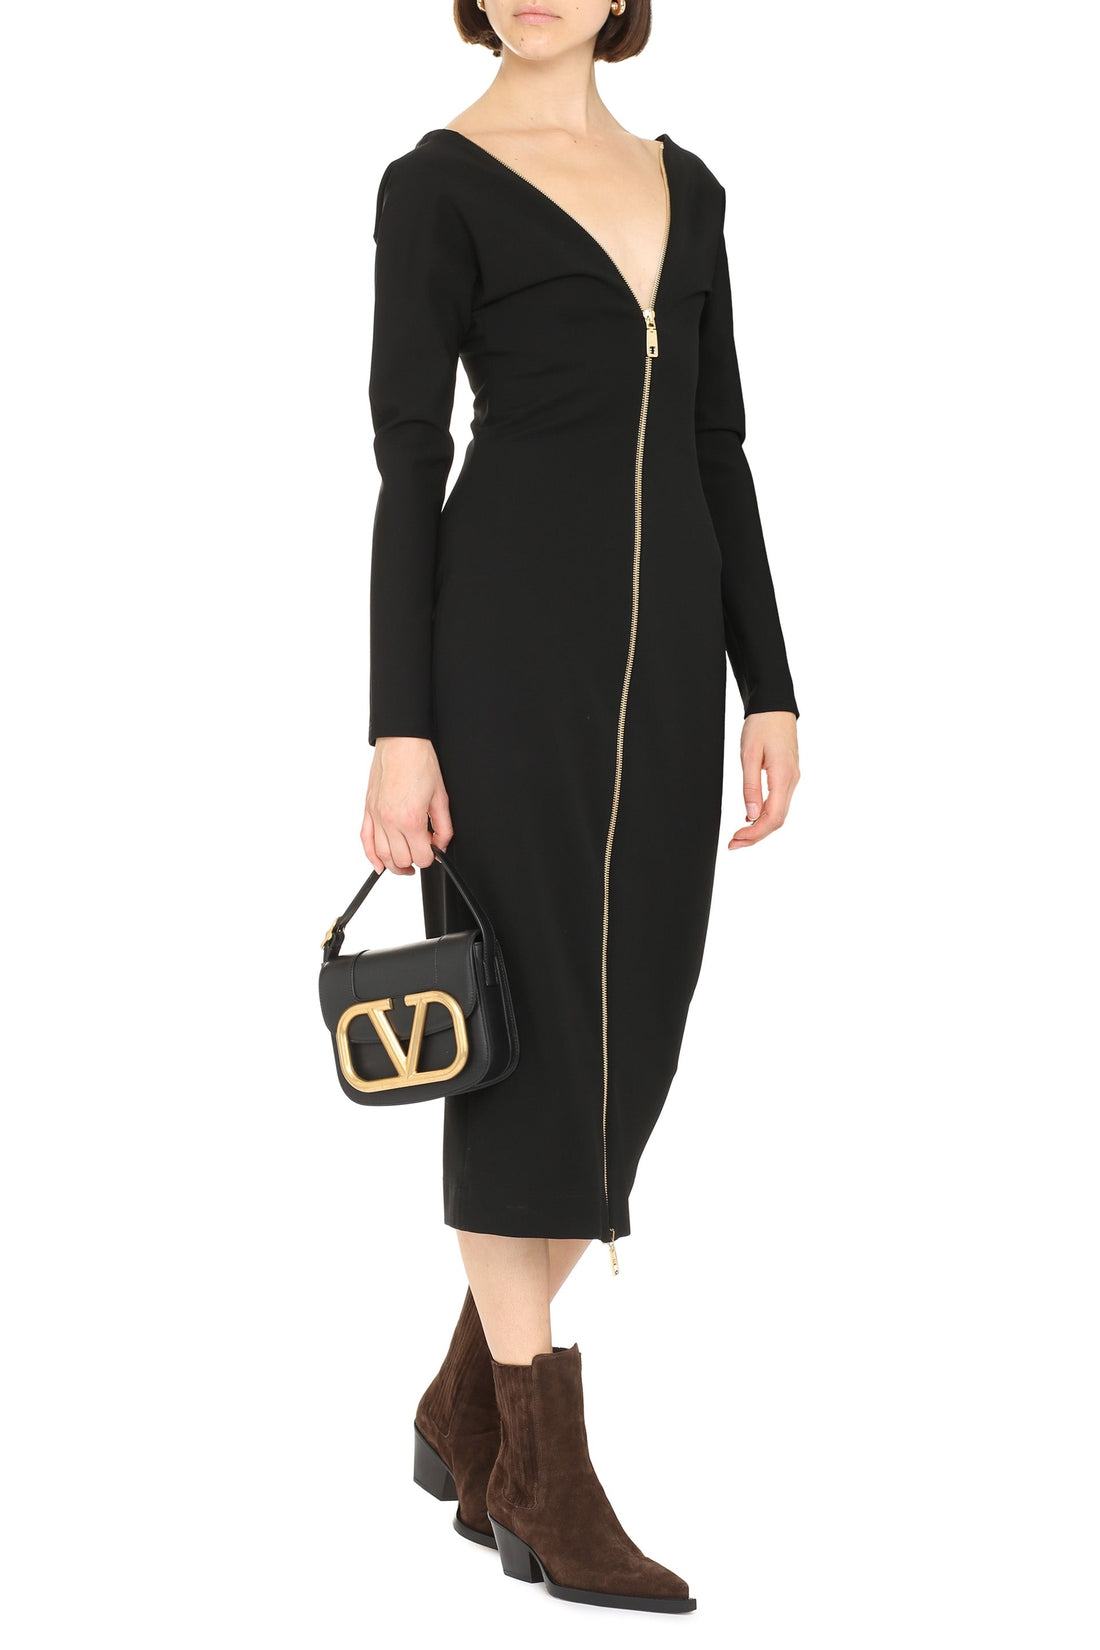 Dolce & Gabbana-OUTLET-SALE-Stretch viscose dress-ARCHIVIST